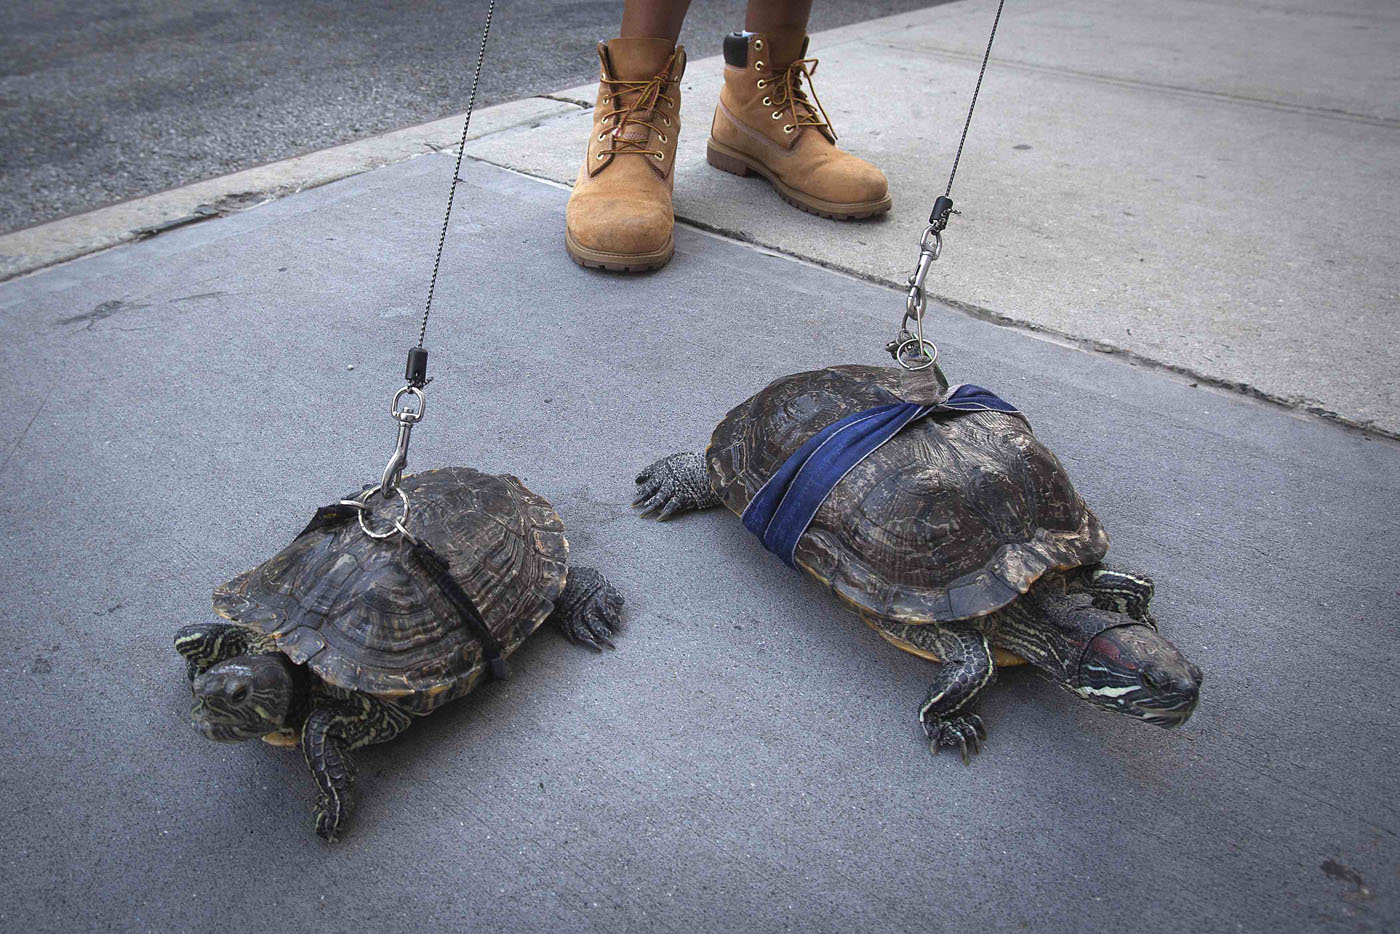 Chris Roland walks his pet turtles in New York.